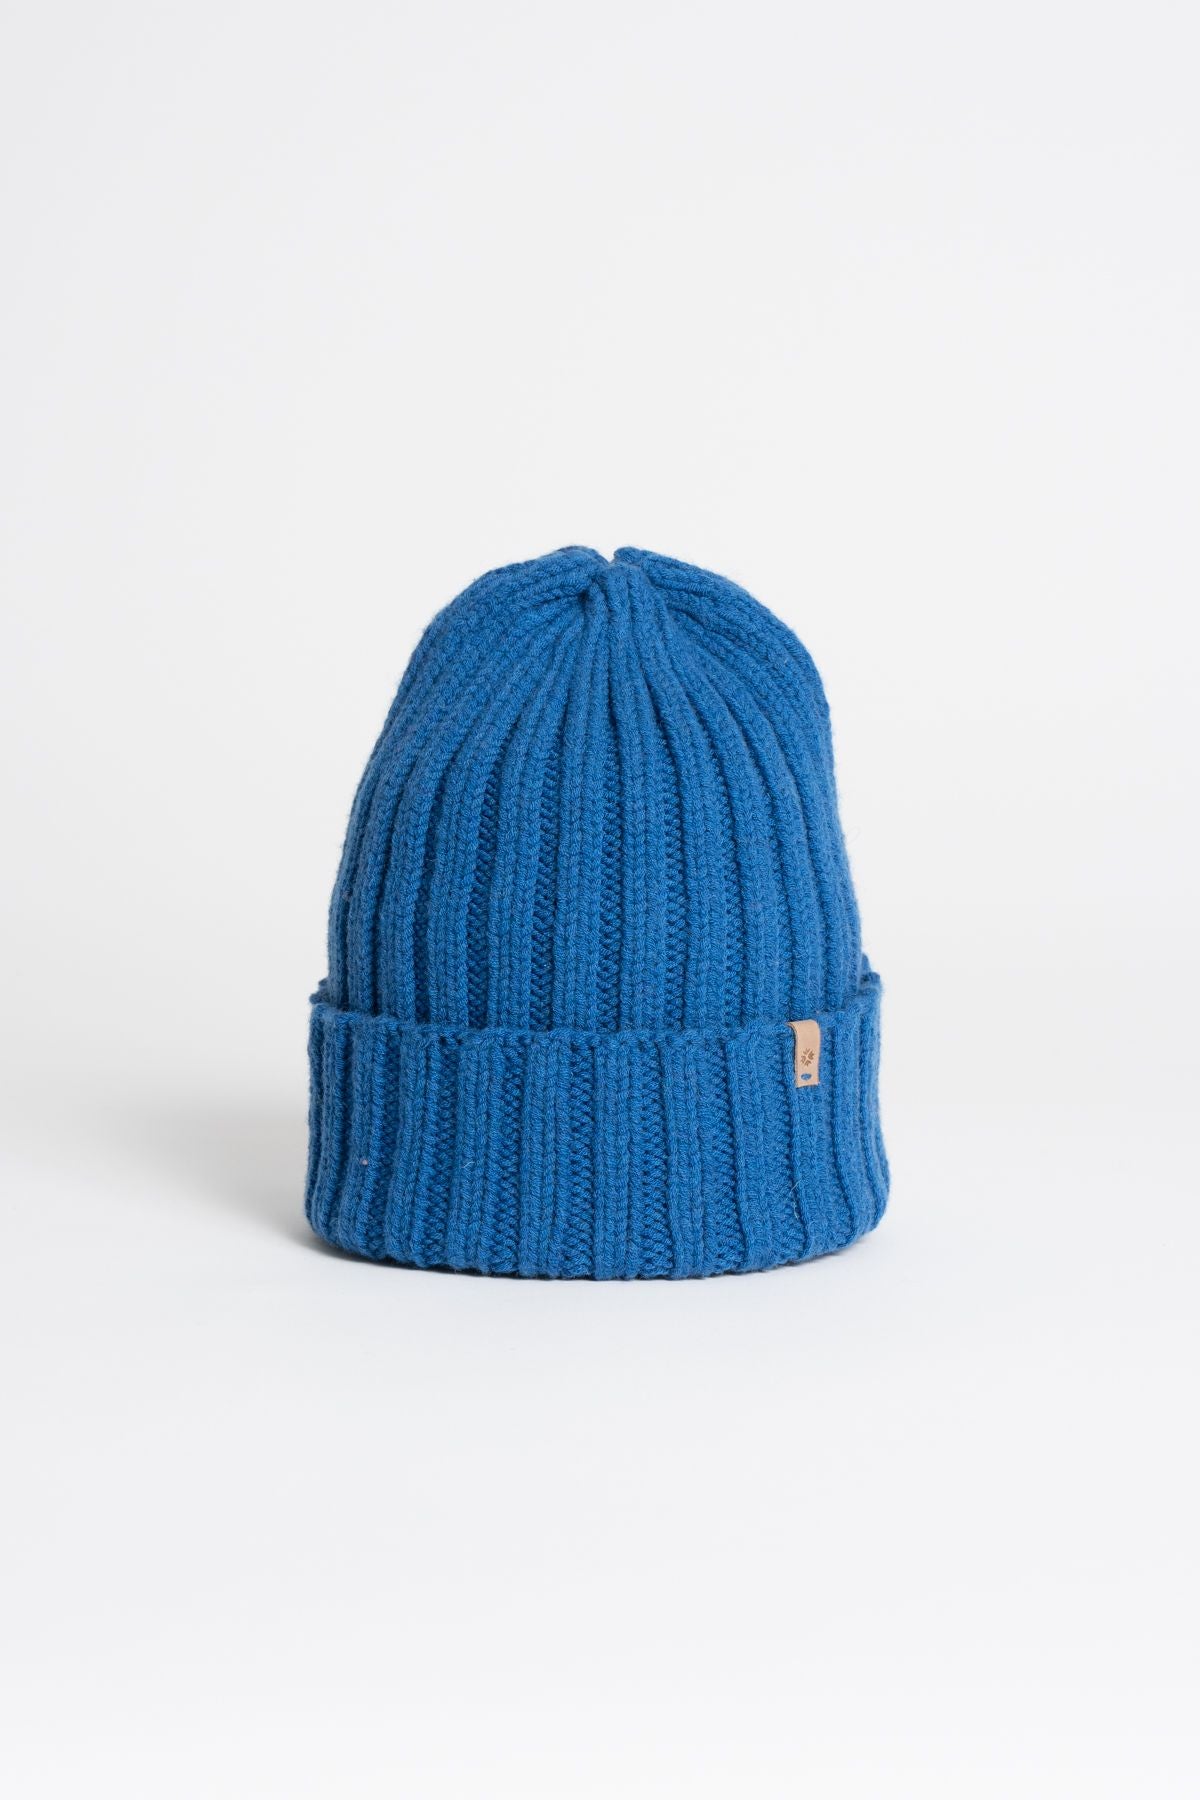 Merino Handknit Thick Rib Hat in Ocean Blue